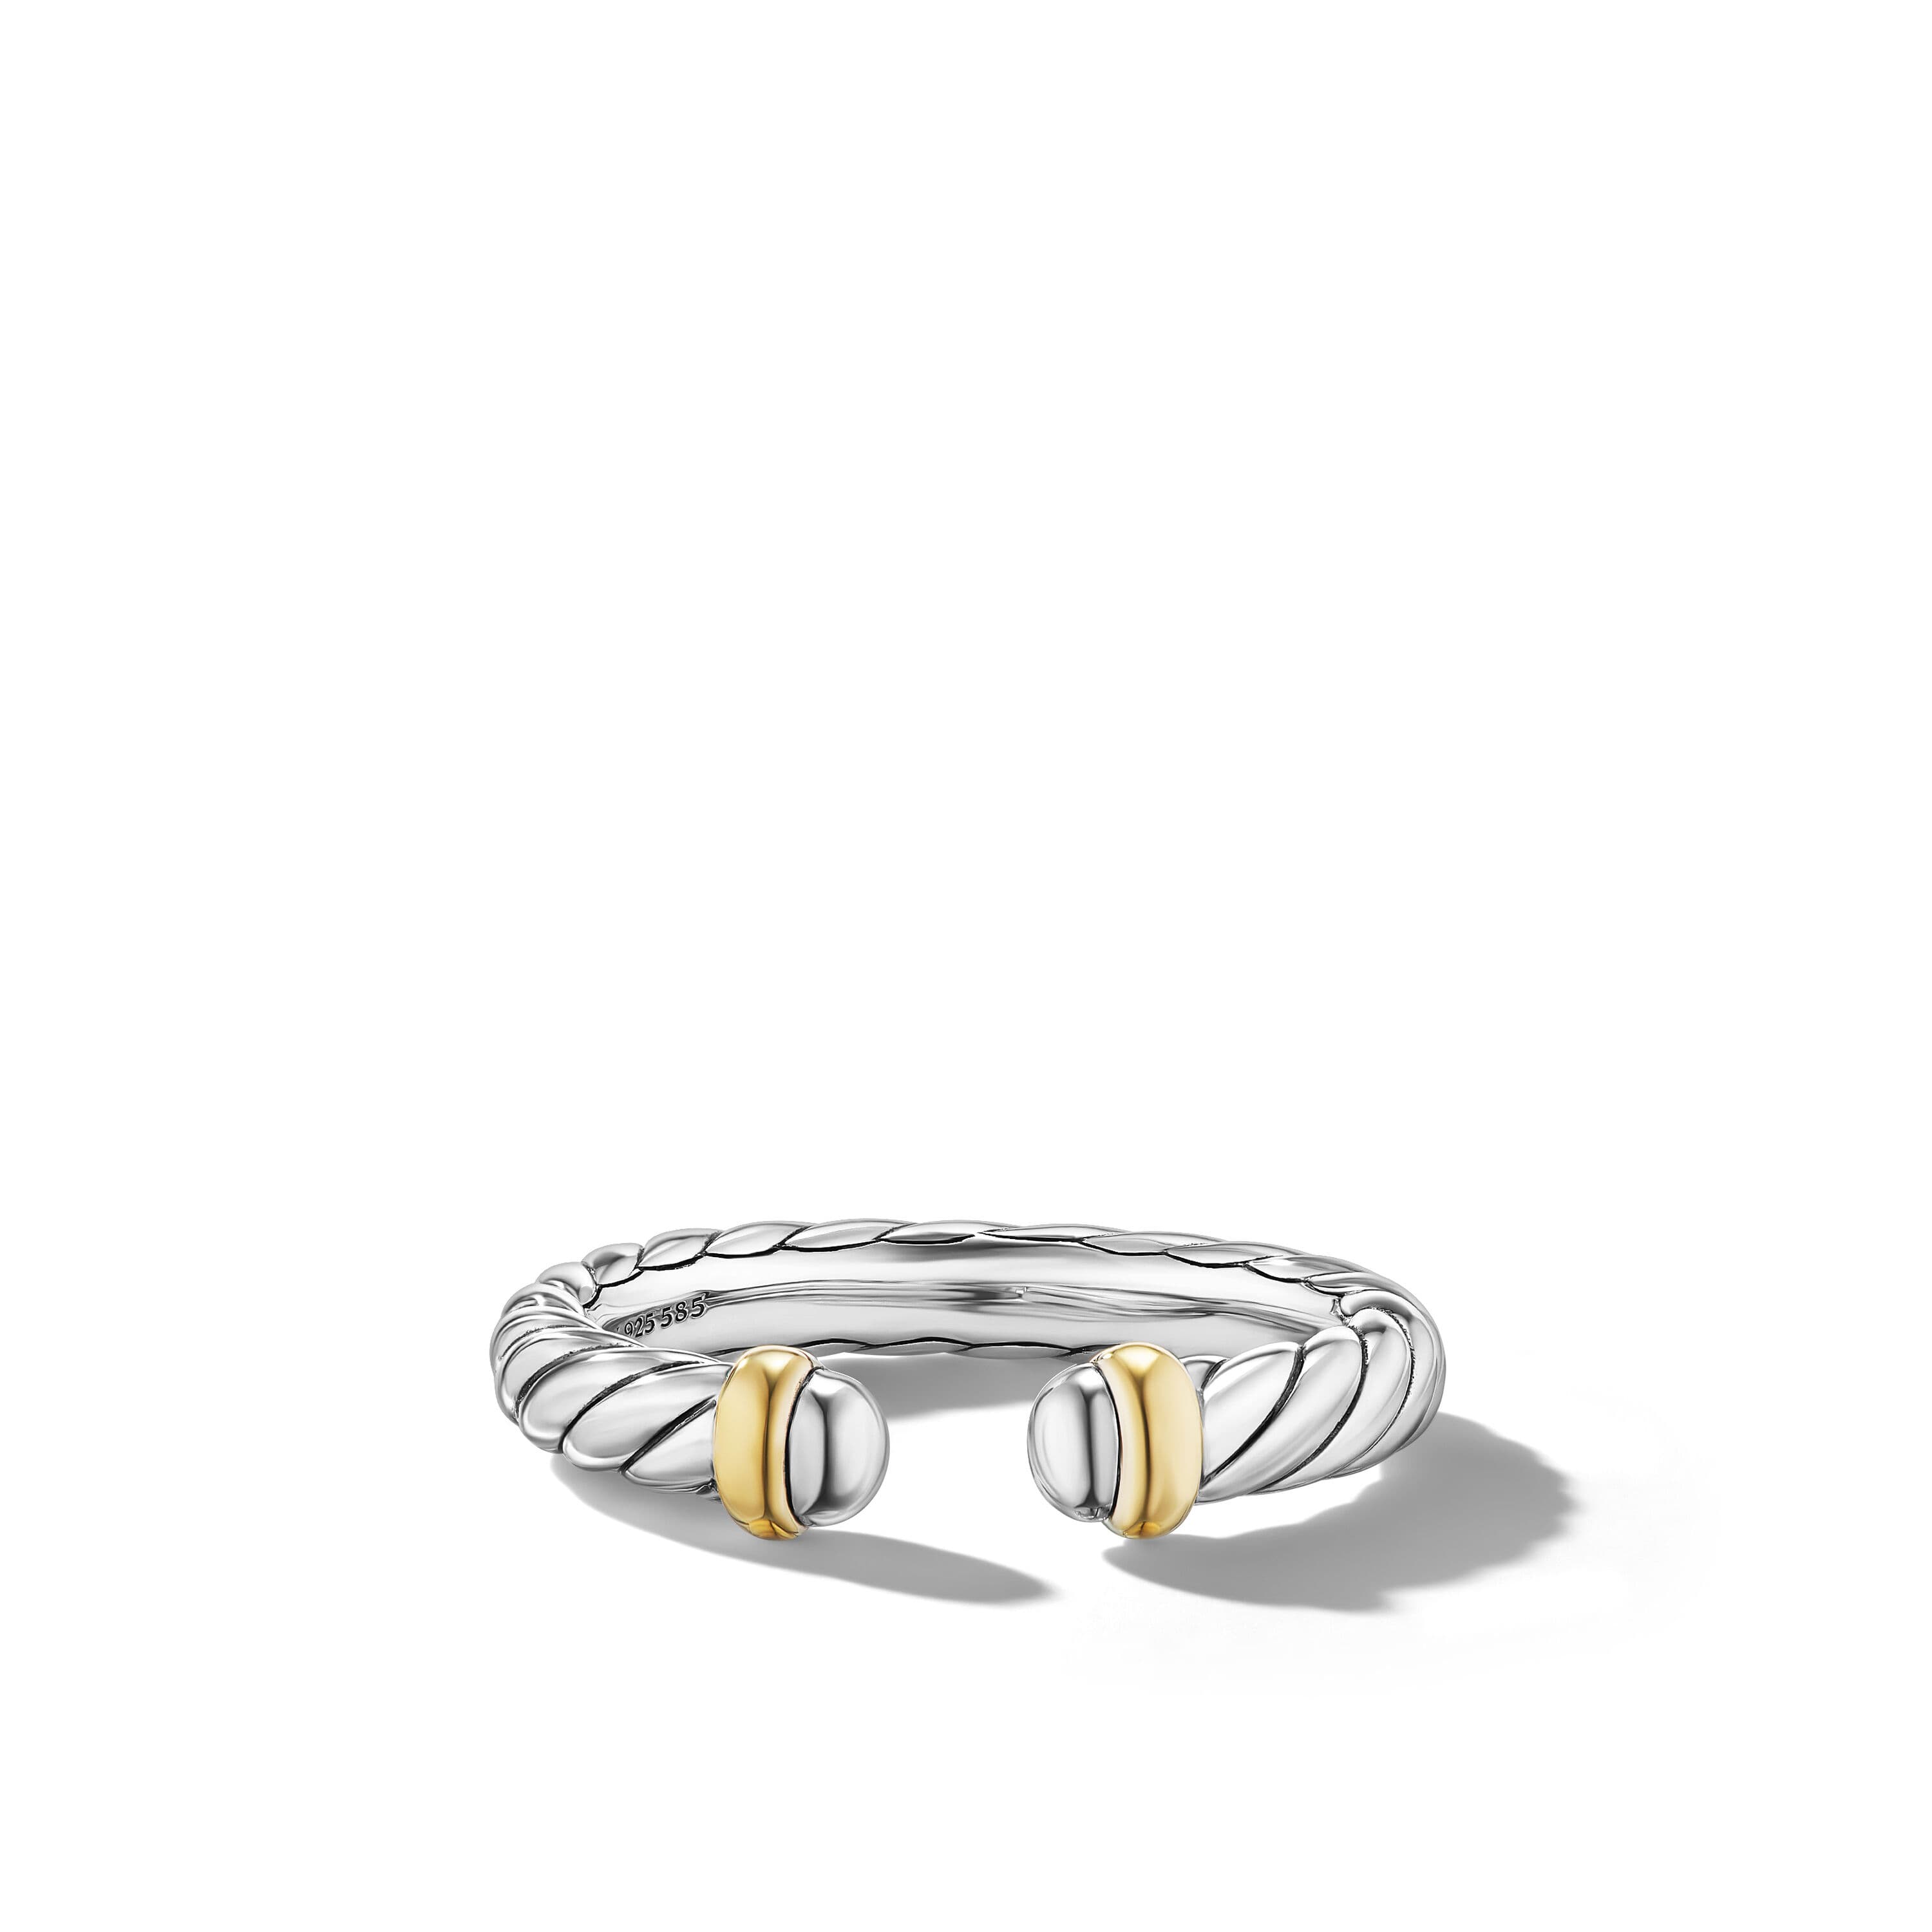 David Yurman Petite Cable Open Style Ring, Size 6